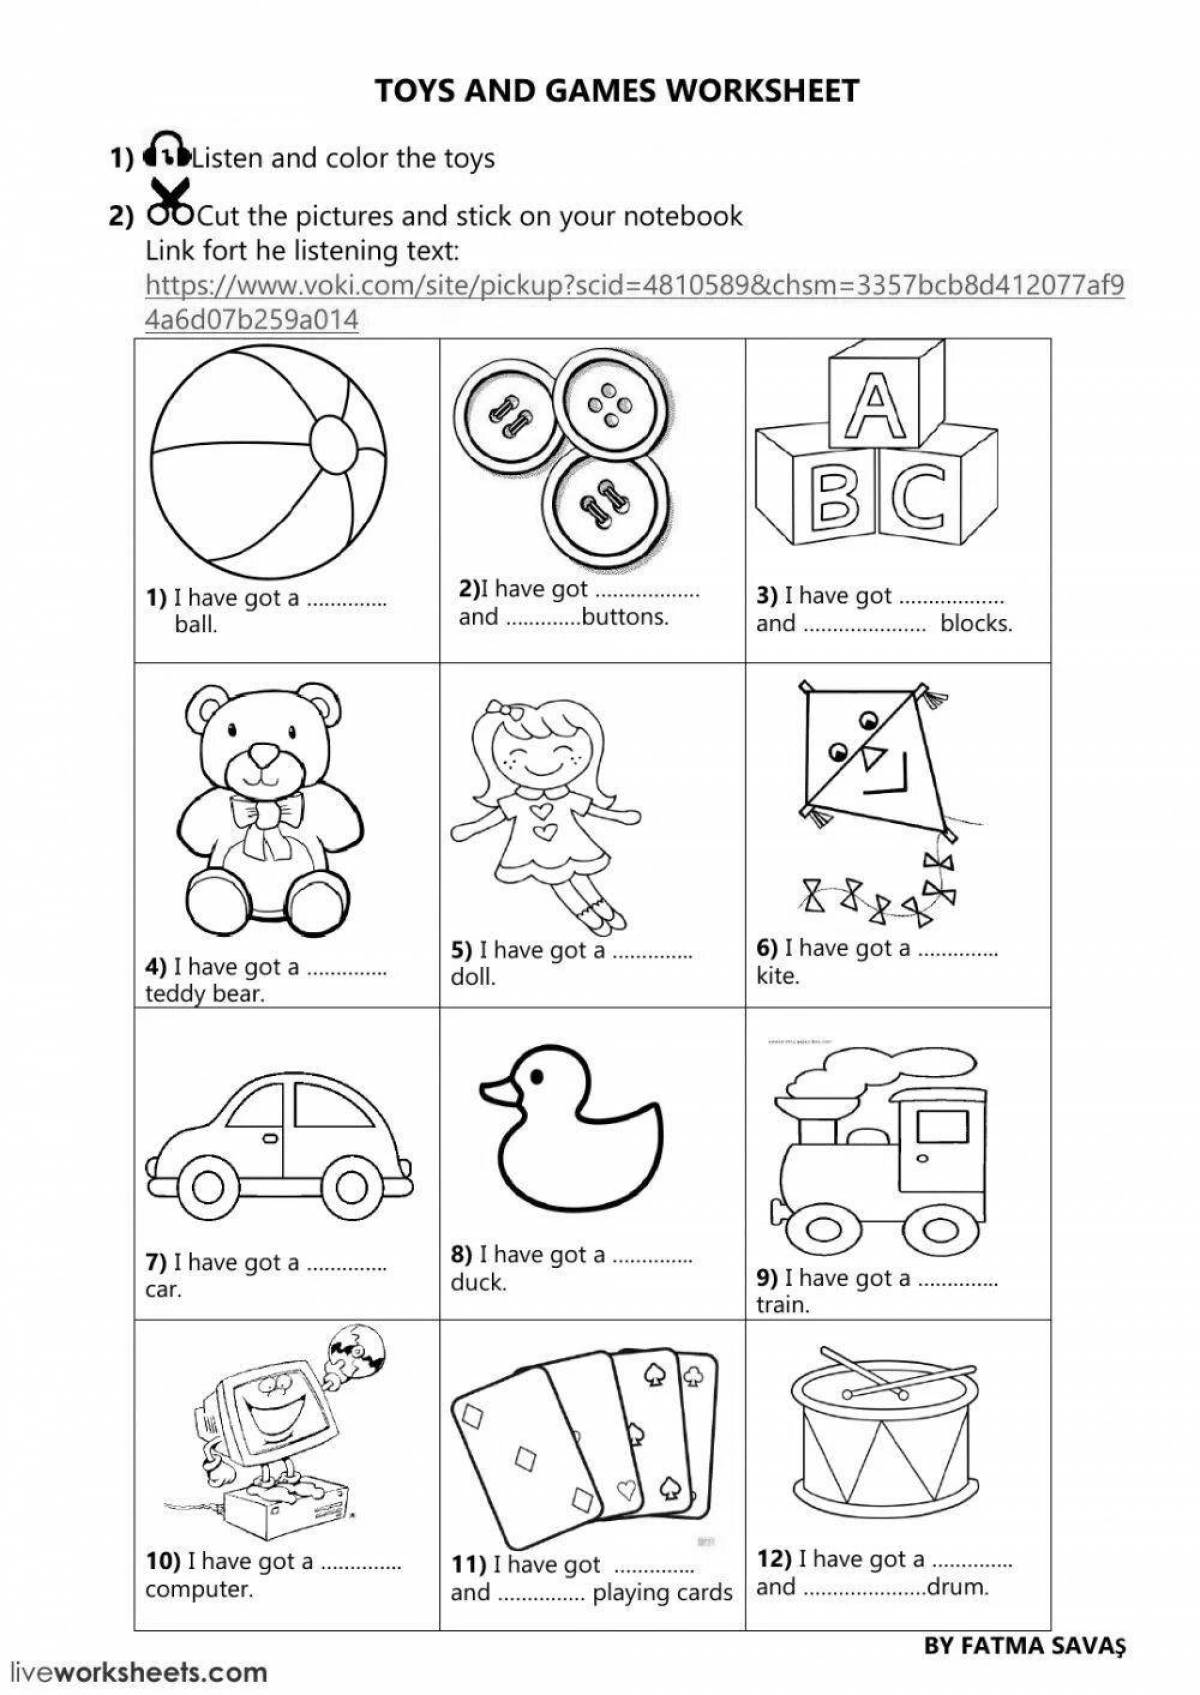 Toys writing. Игрушки Worksheets. Игрушки на английском Worksheet. Игрушки на английском задания. Игрушки Worksheets for Kids.